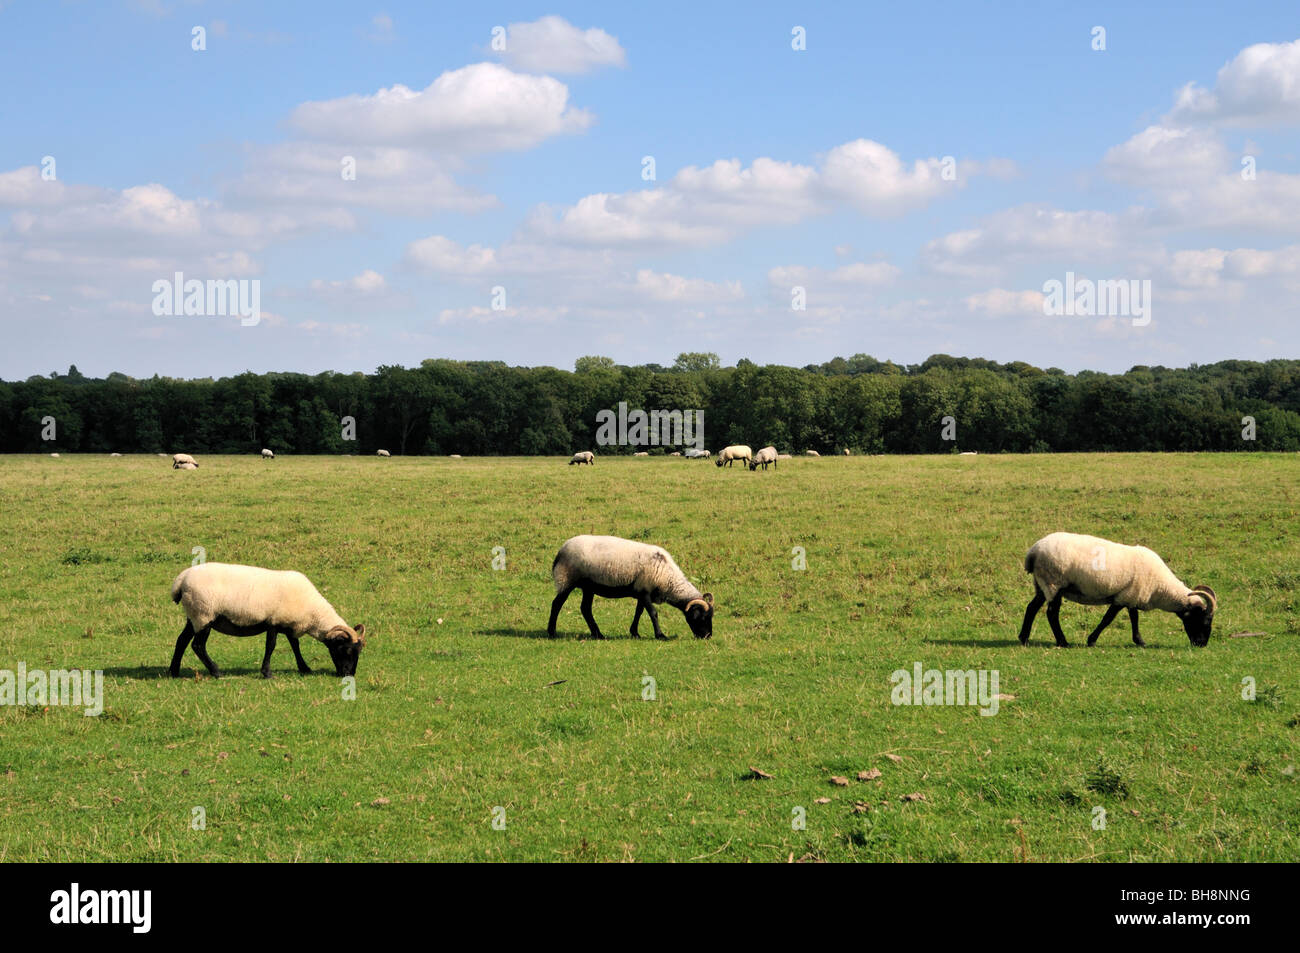 Blackface Norfolk horned sheep in the Hertforshire countryside, UK. Stock Photo